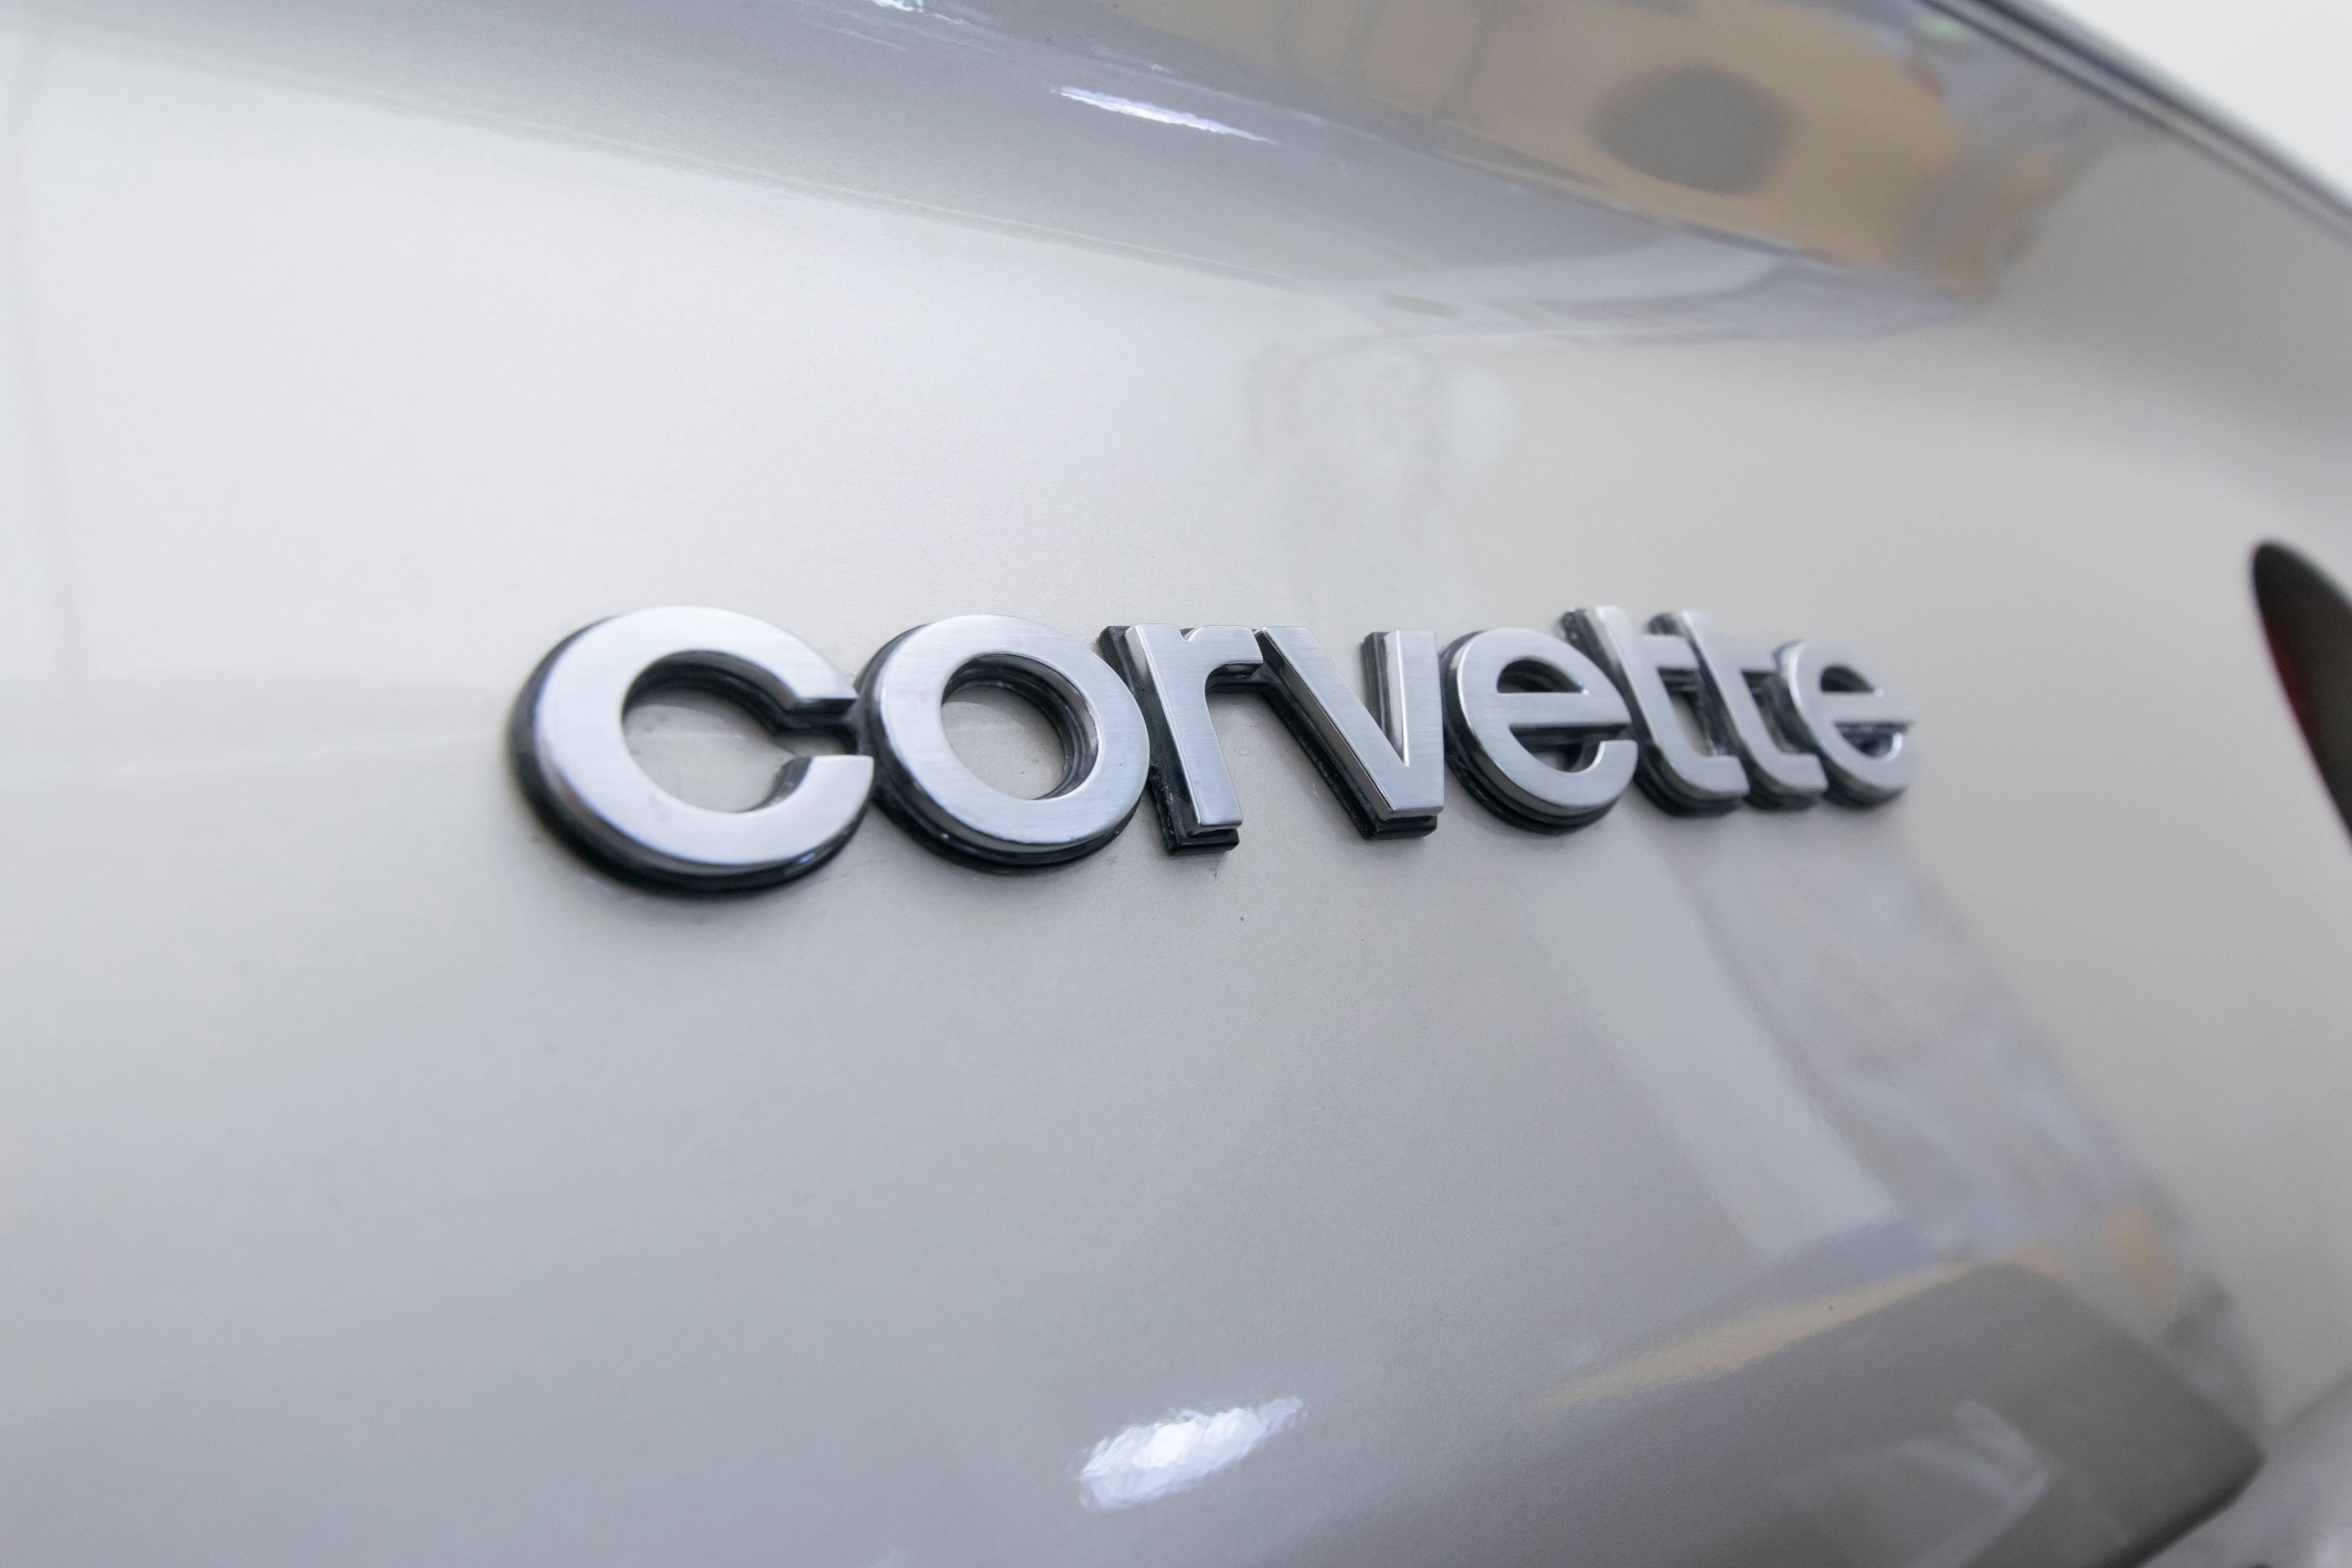 1982 Chevrolet Corvette (C3) Collectors Edition